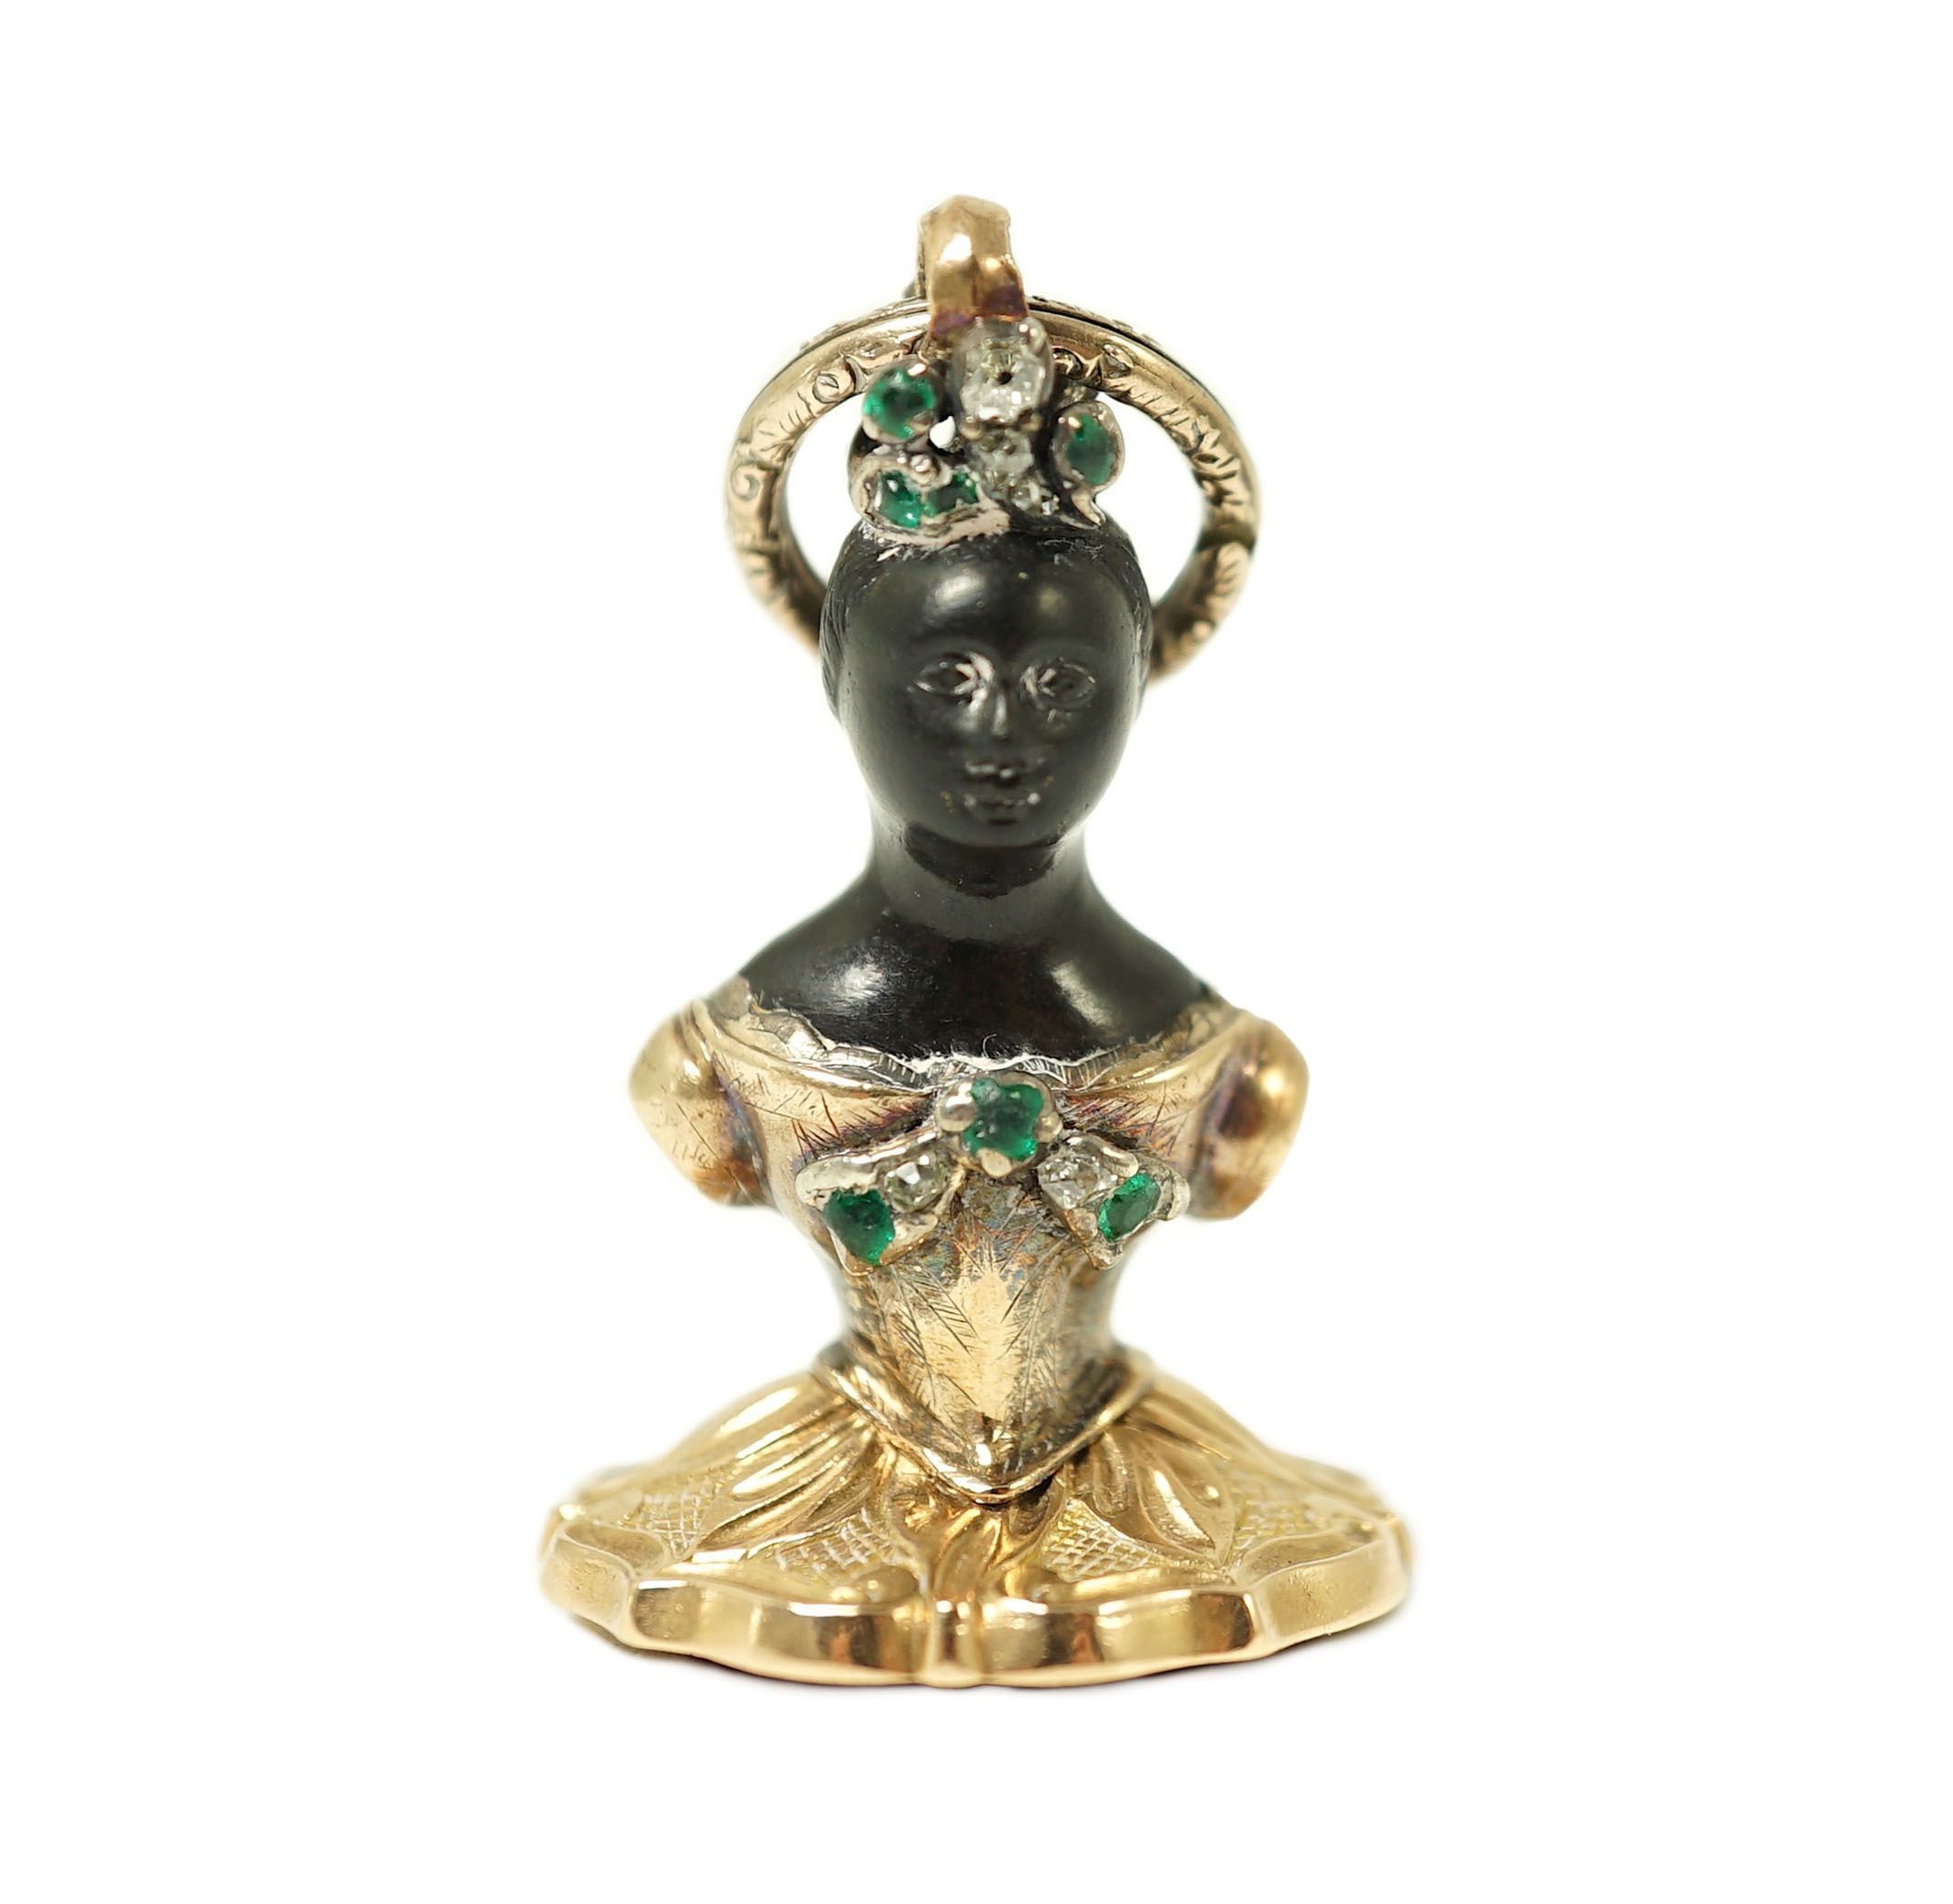 A 19th century gold overlaid, emerald and diamond set double sided Blackamoor seal pendant